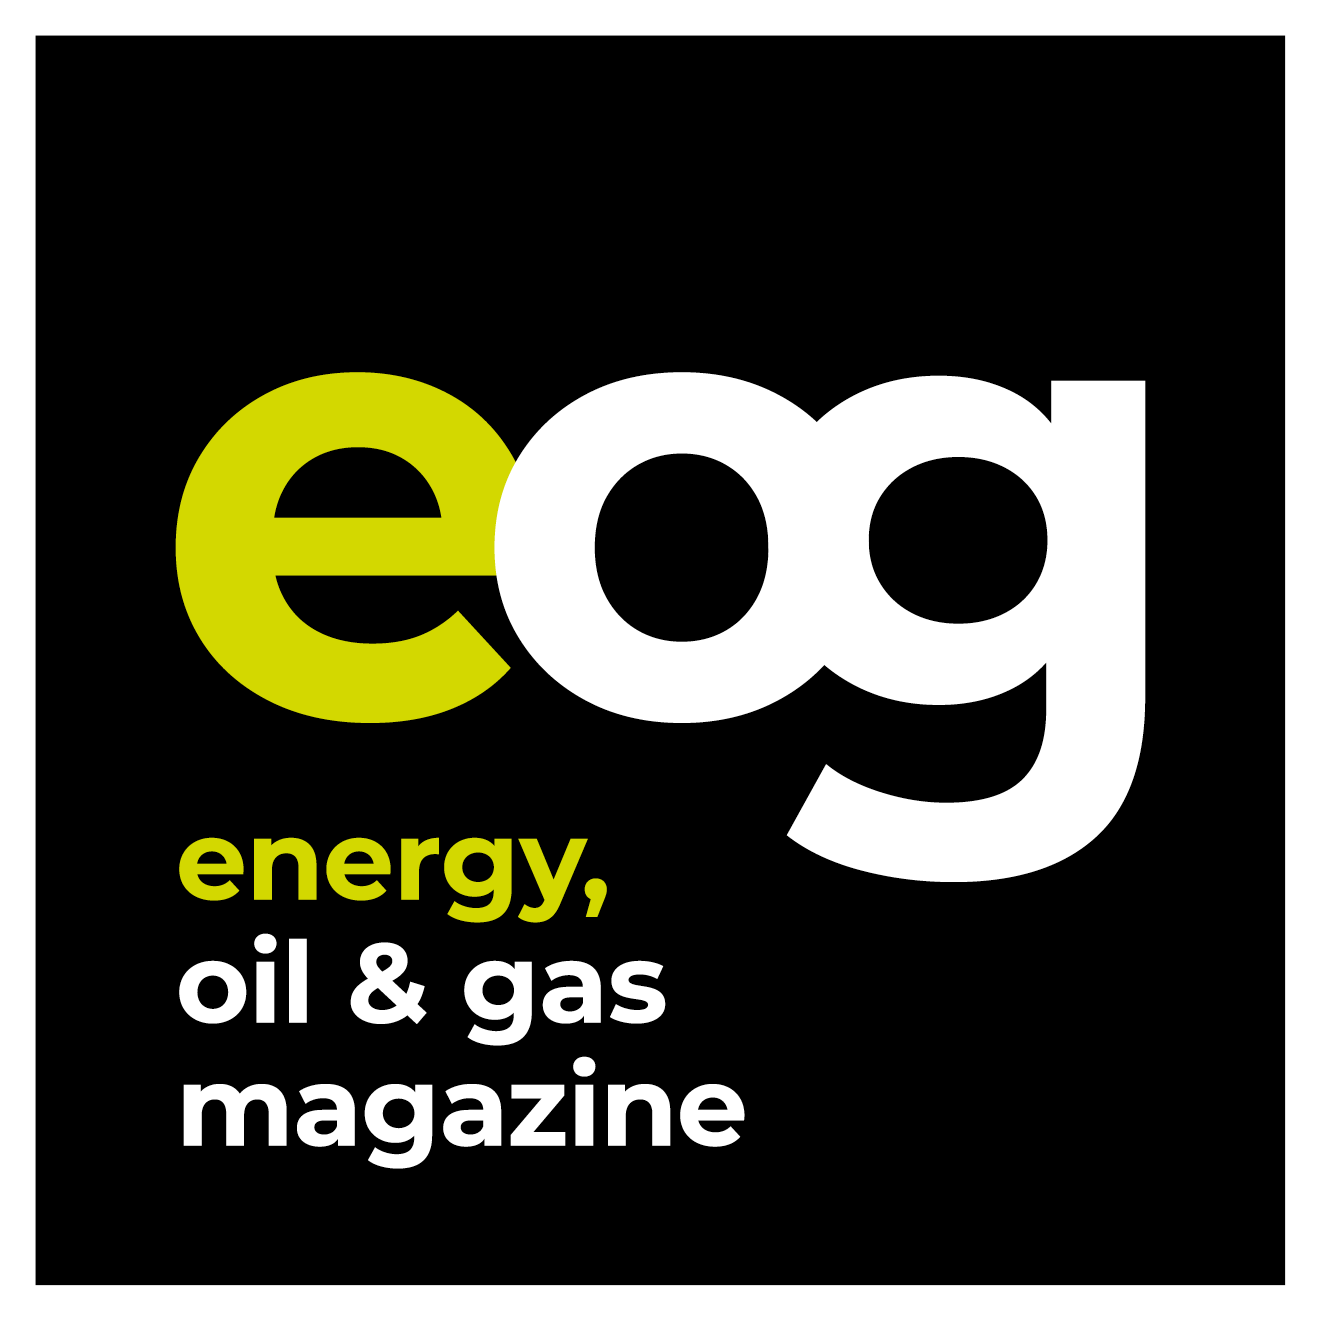 Energy, Oil & Gas magazine interview